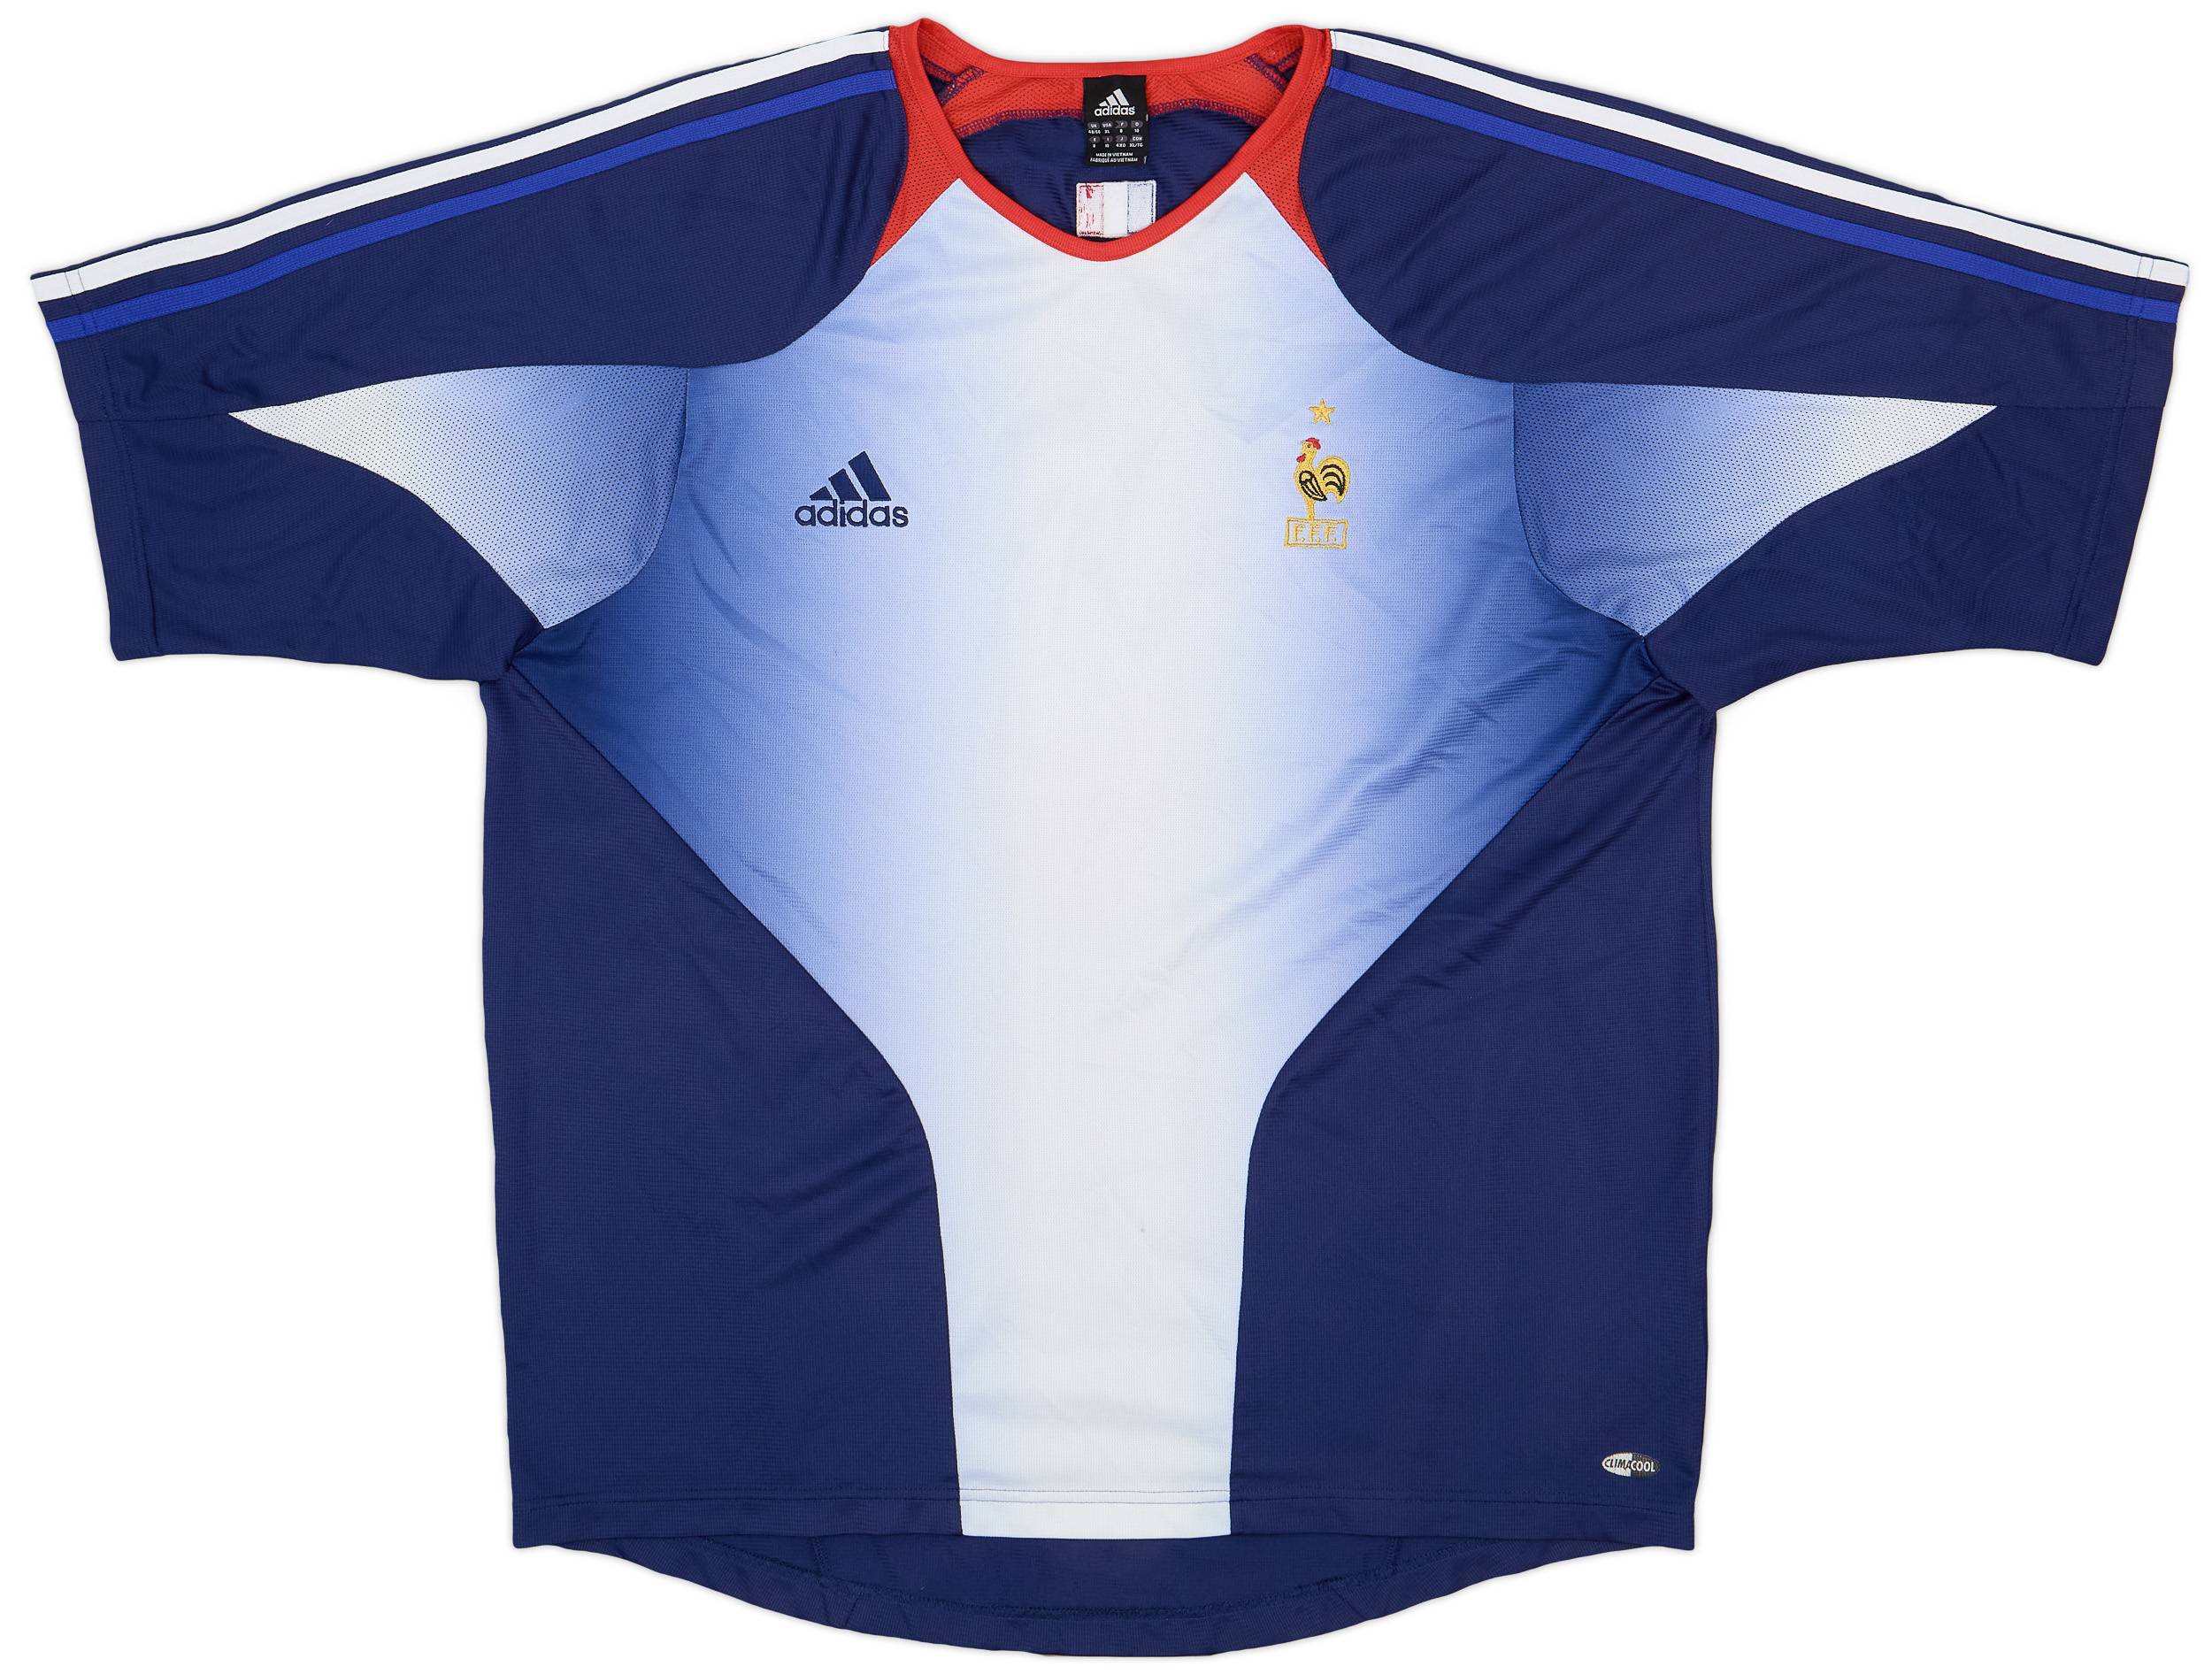 2004-06 France adidas Training Shirt - 8/10 - (XXL)